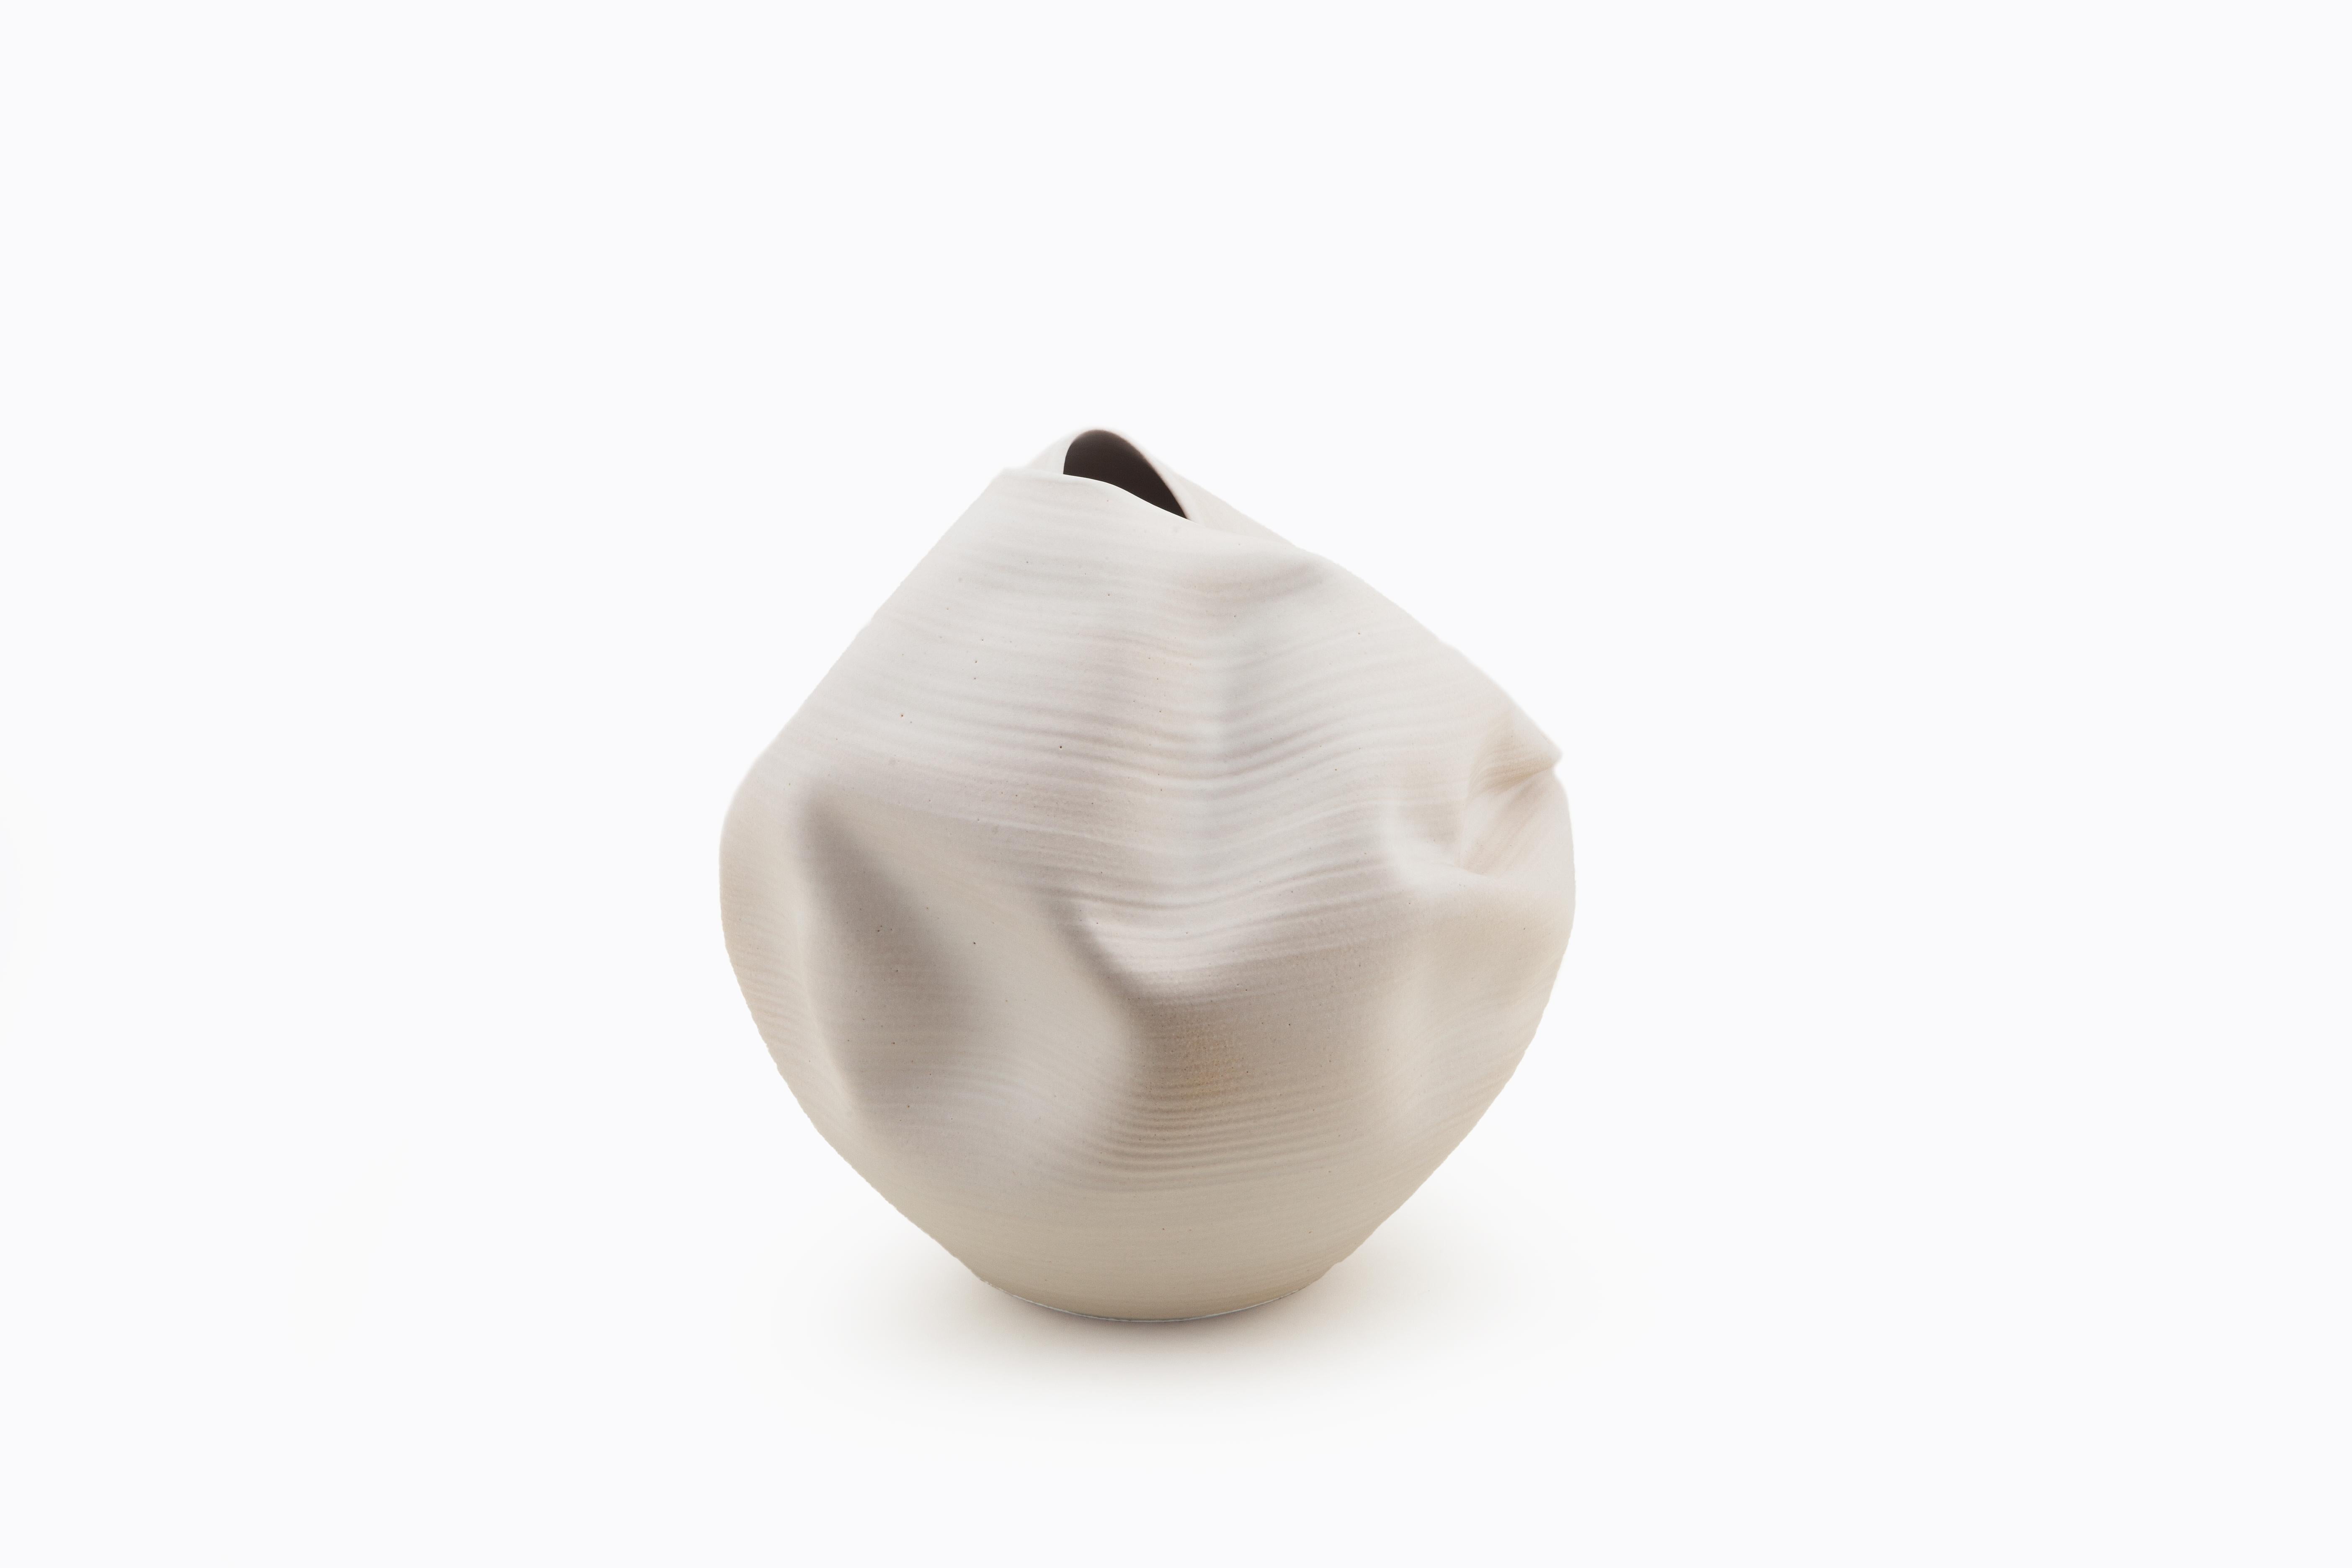 Organic Modern White Irregular Form, Vase, Interior Sculpture or Vessel, Objet D'Art